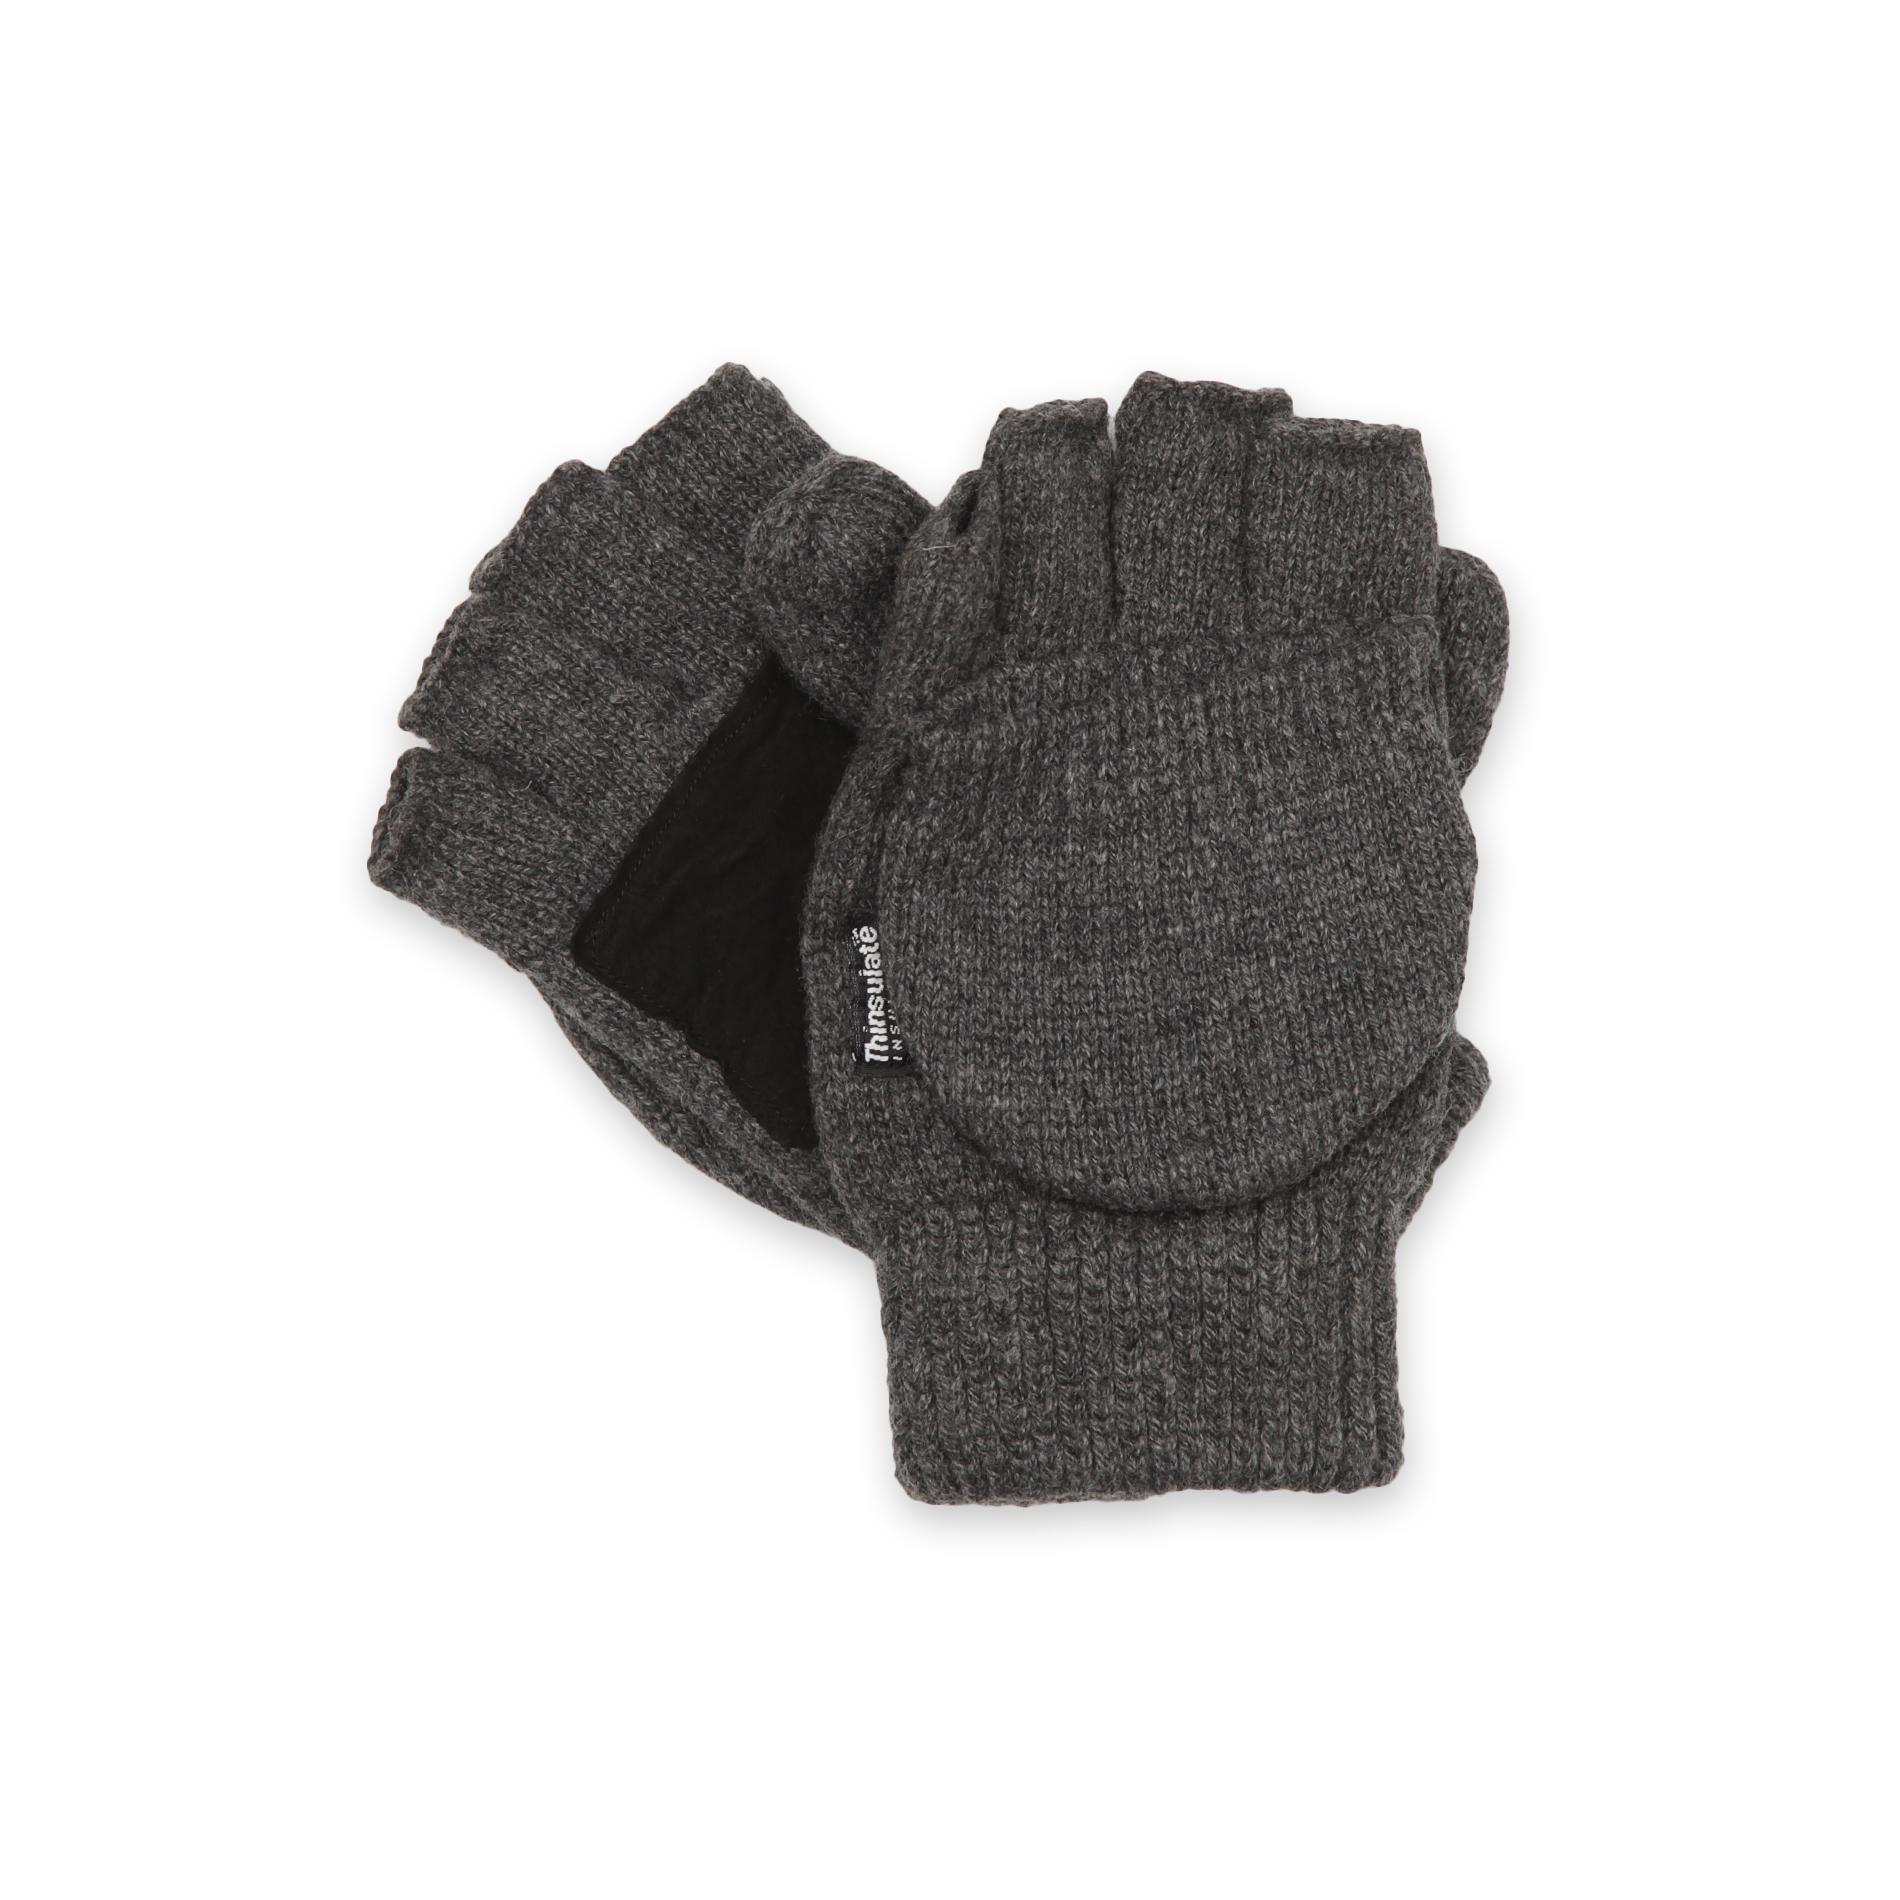 Athletech Men's Convertible Knit Gloves